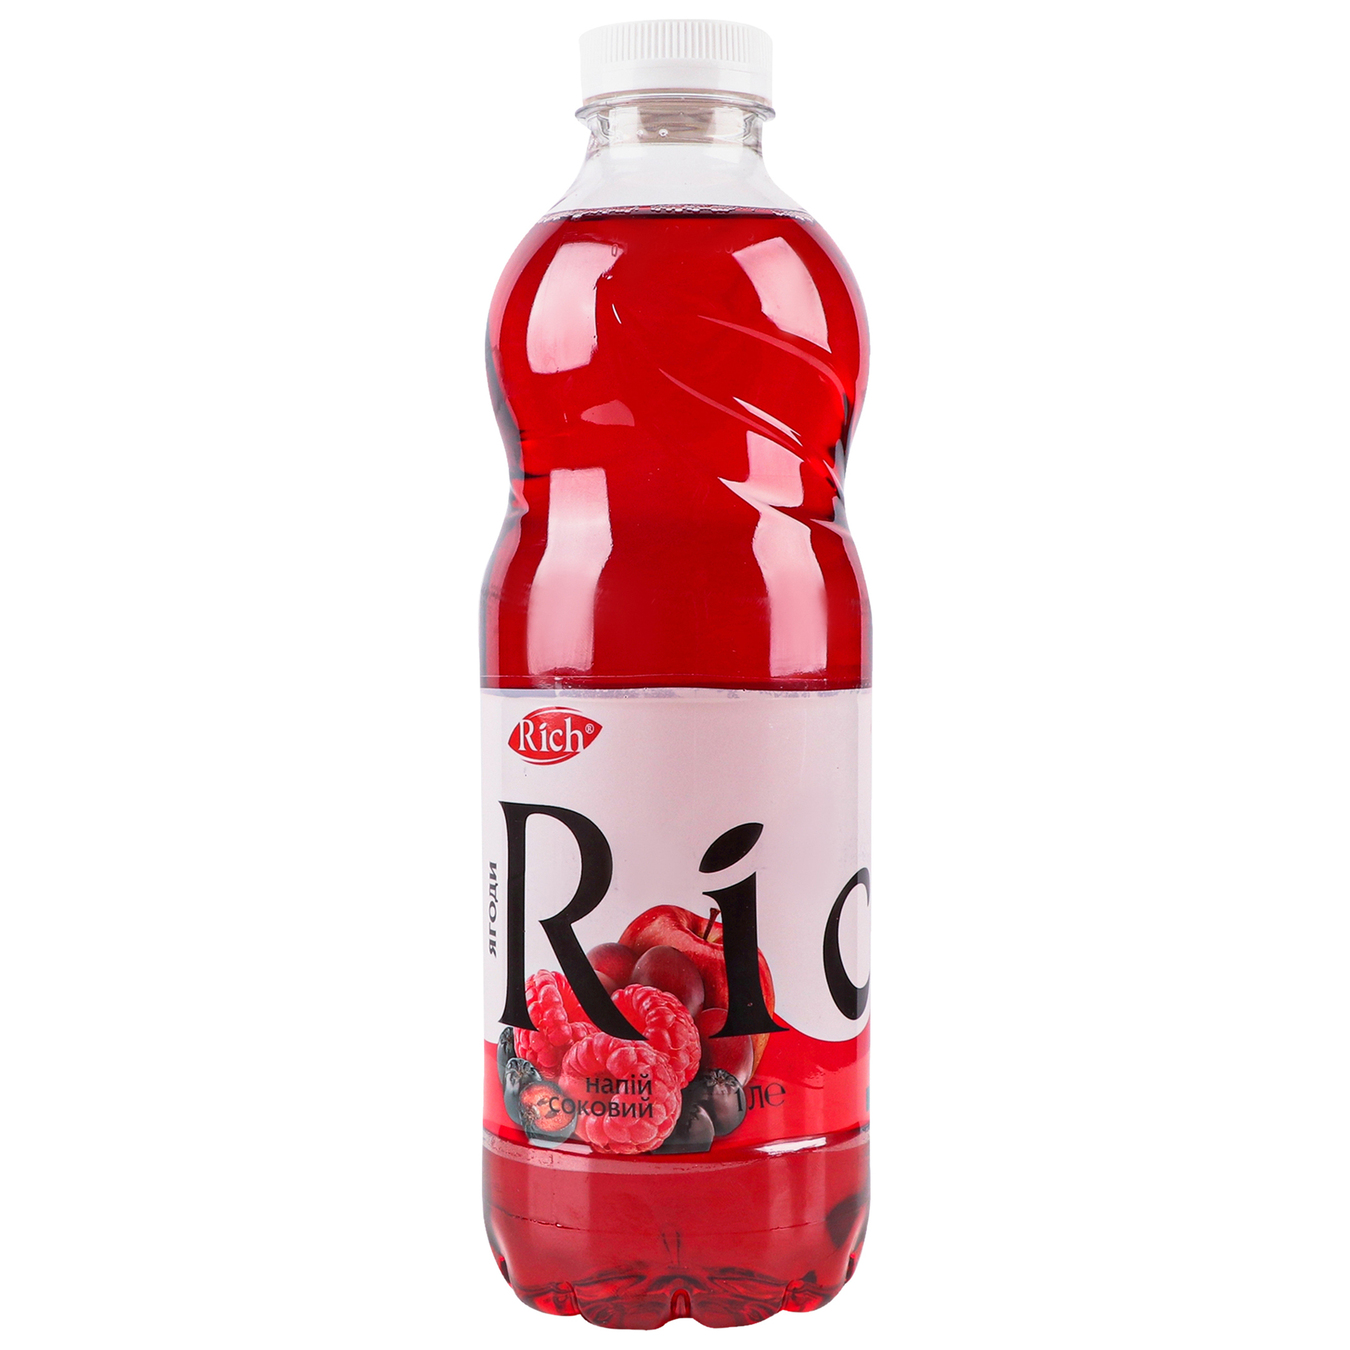 Juice drink Rich berries 1 liter